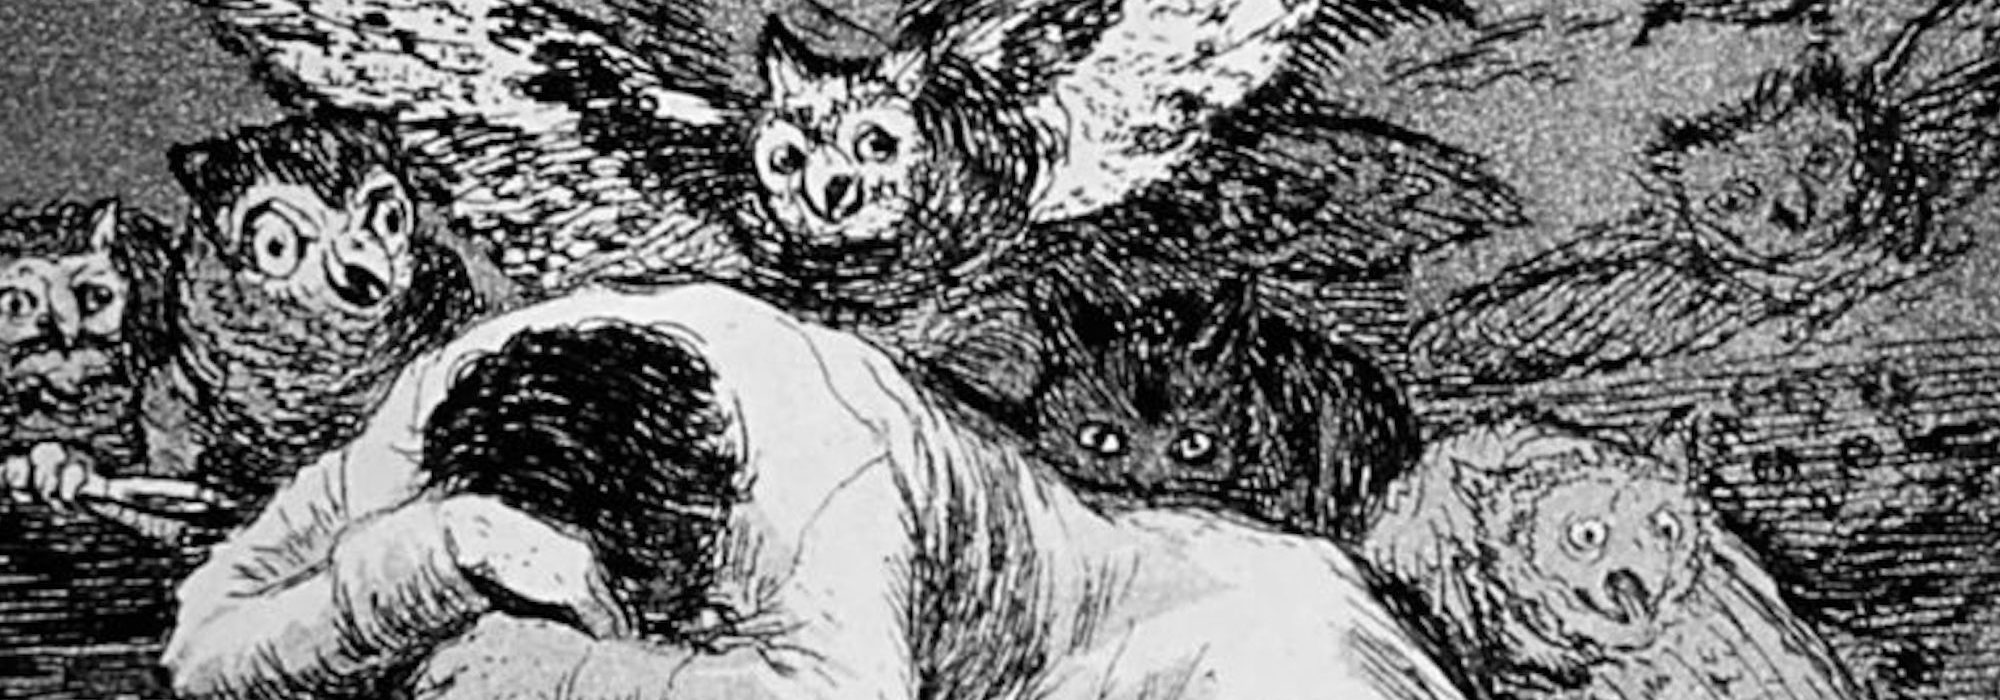 O Sono da Razão Produz Monstros - Goya